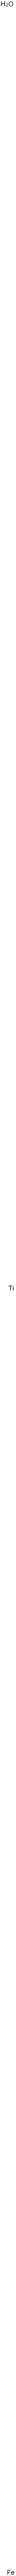 IRON(III) TITANIUM OXIDE|氧化钛铁